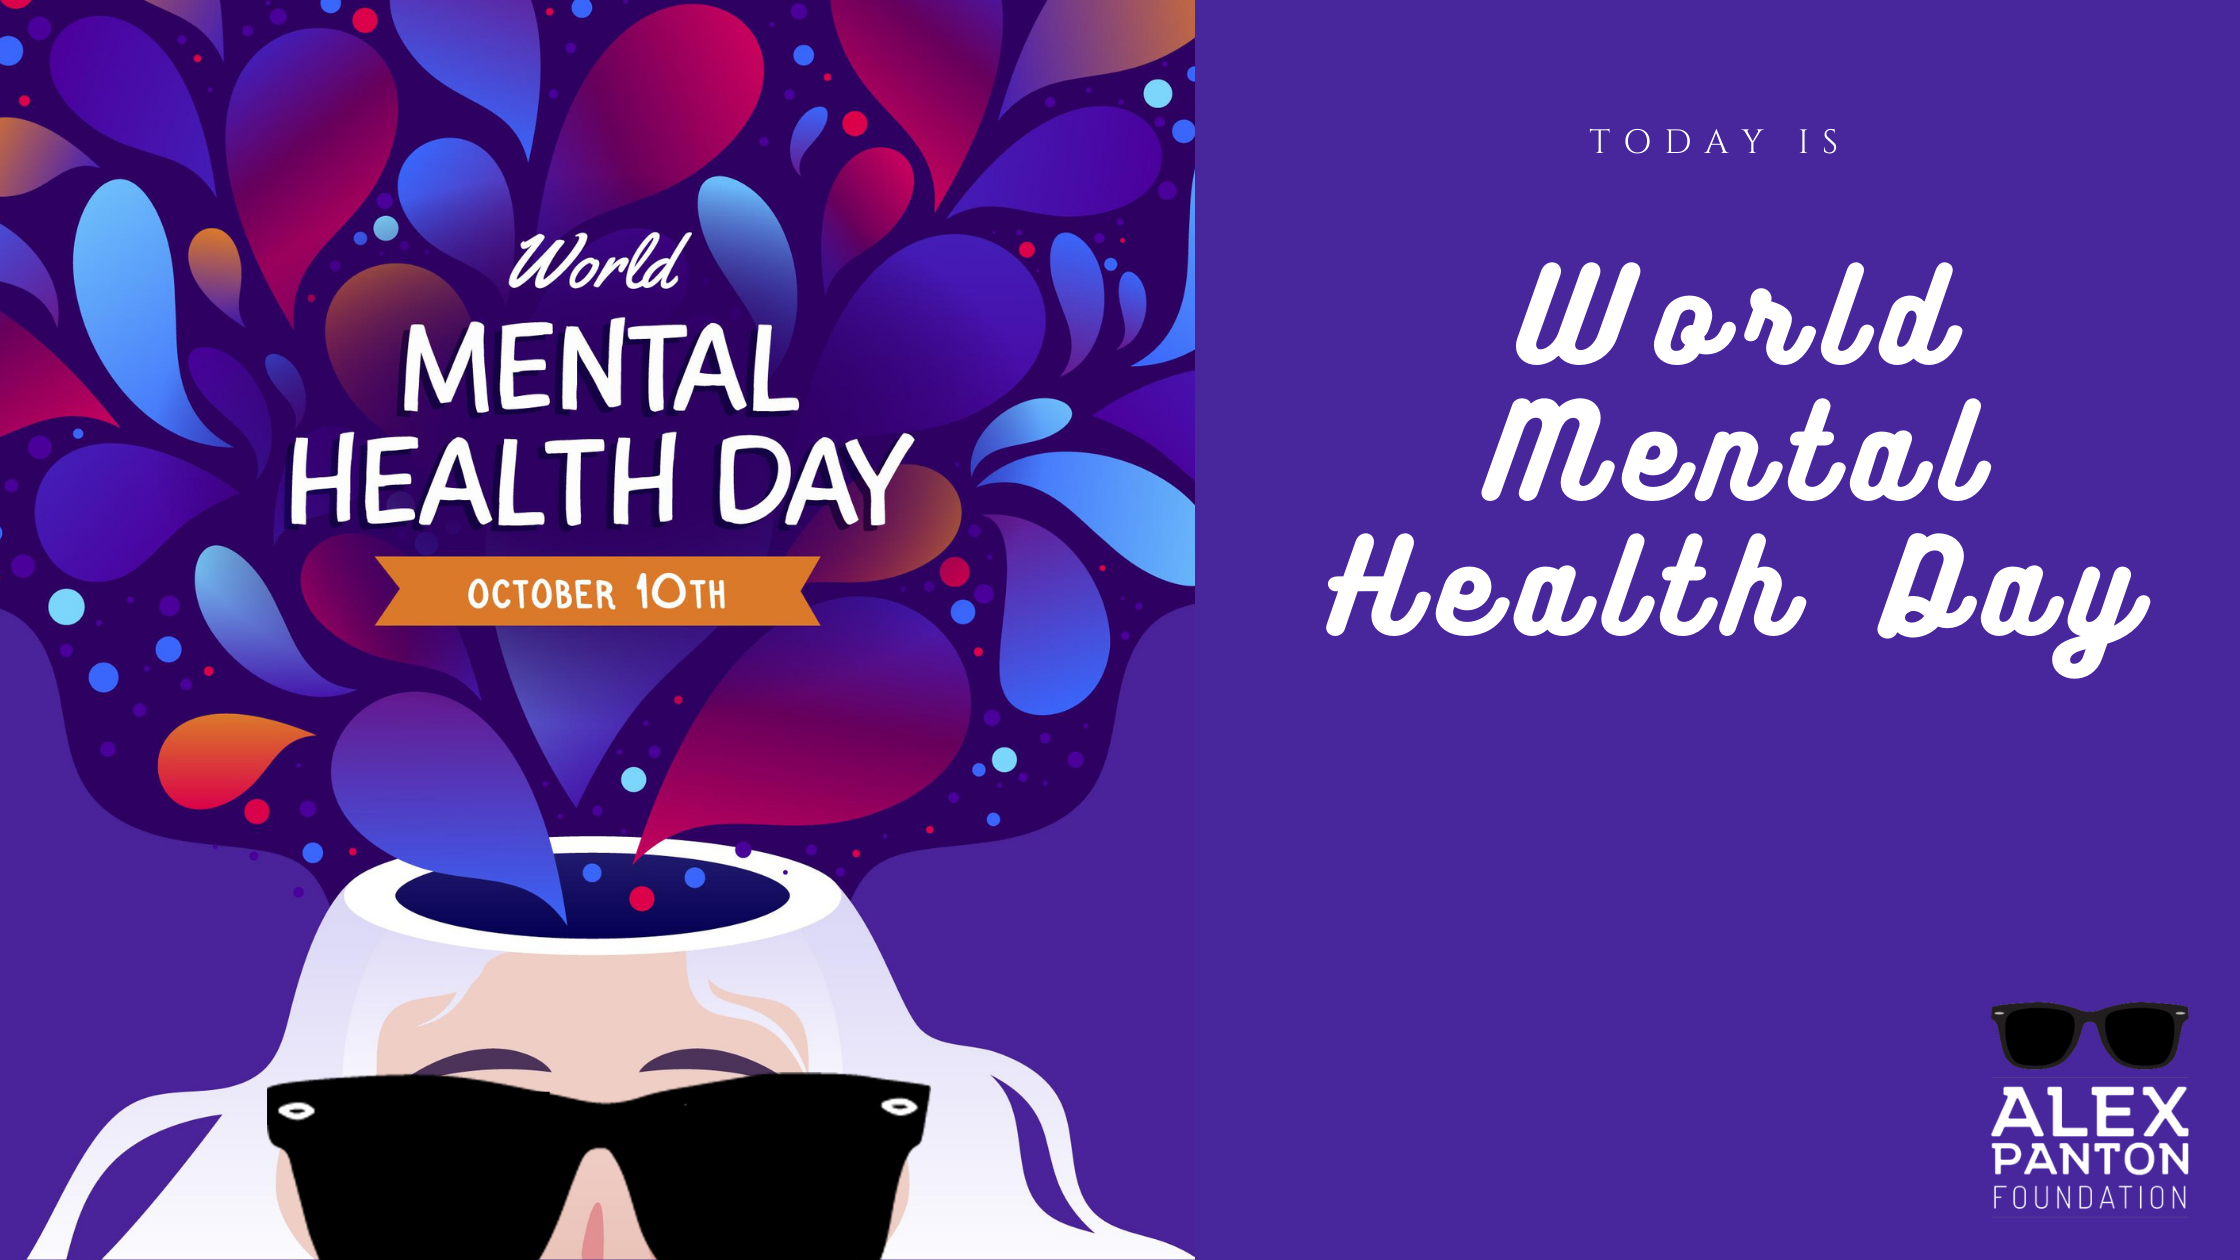 World Mental Health Day 2020